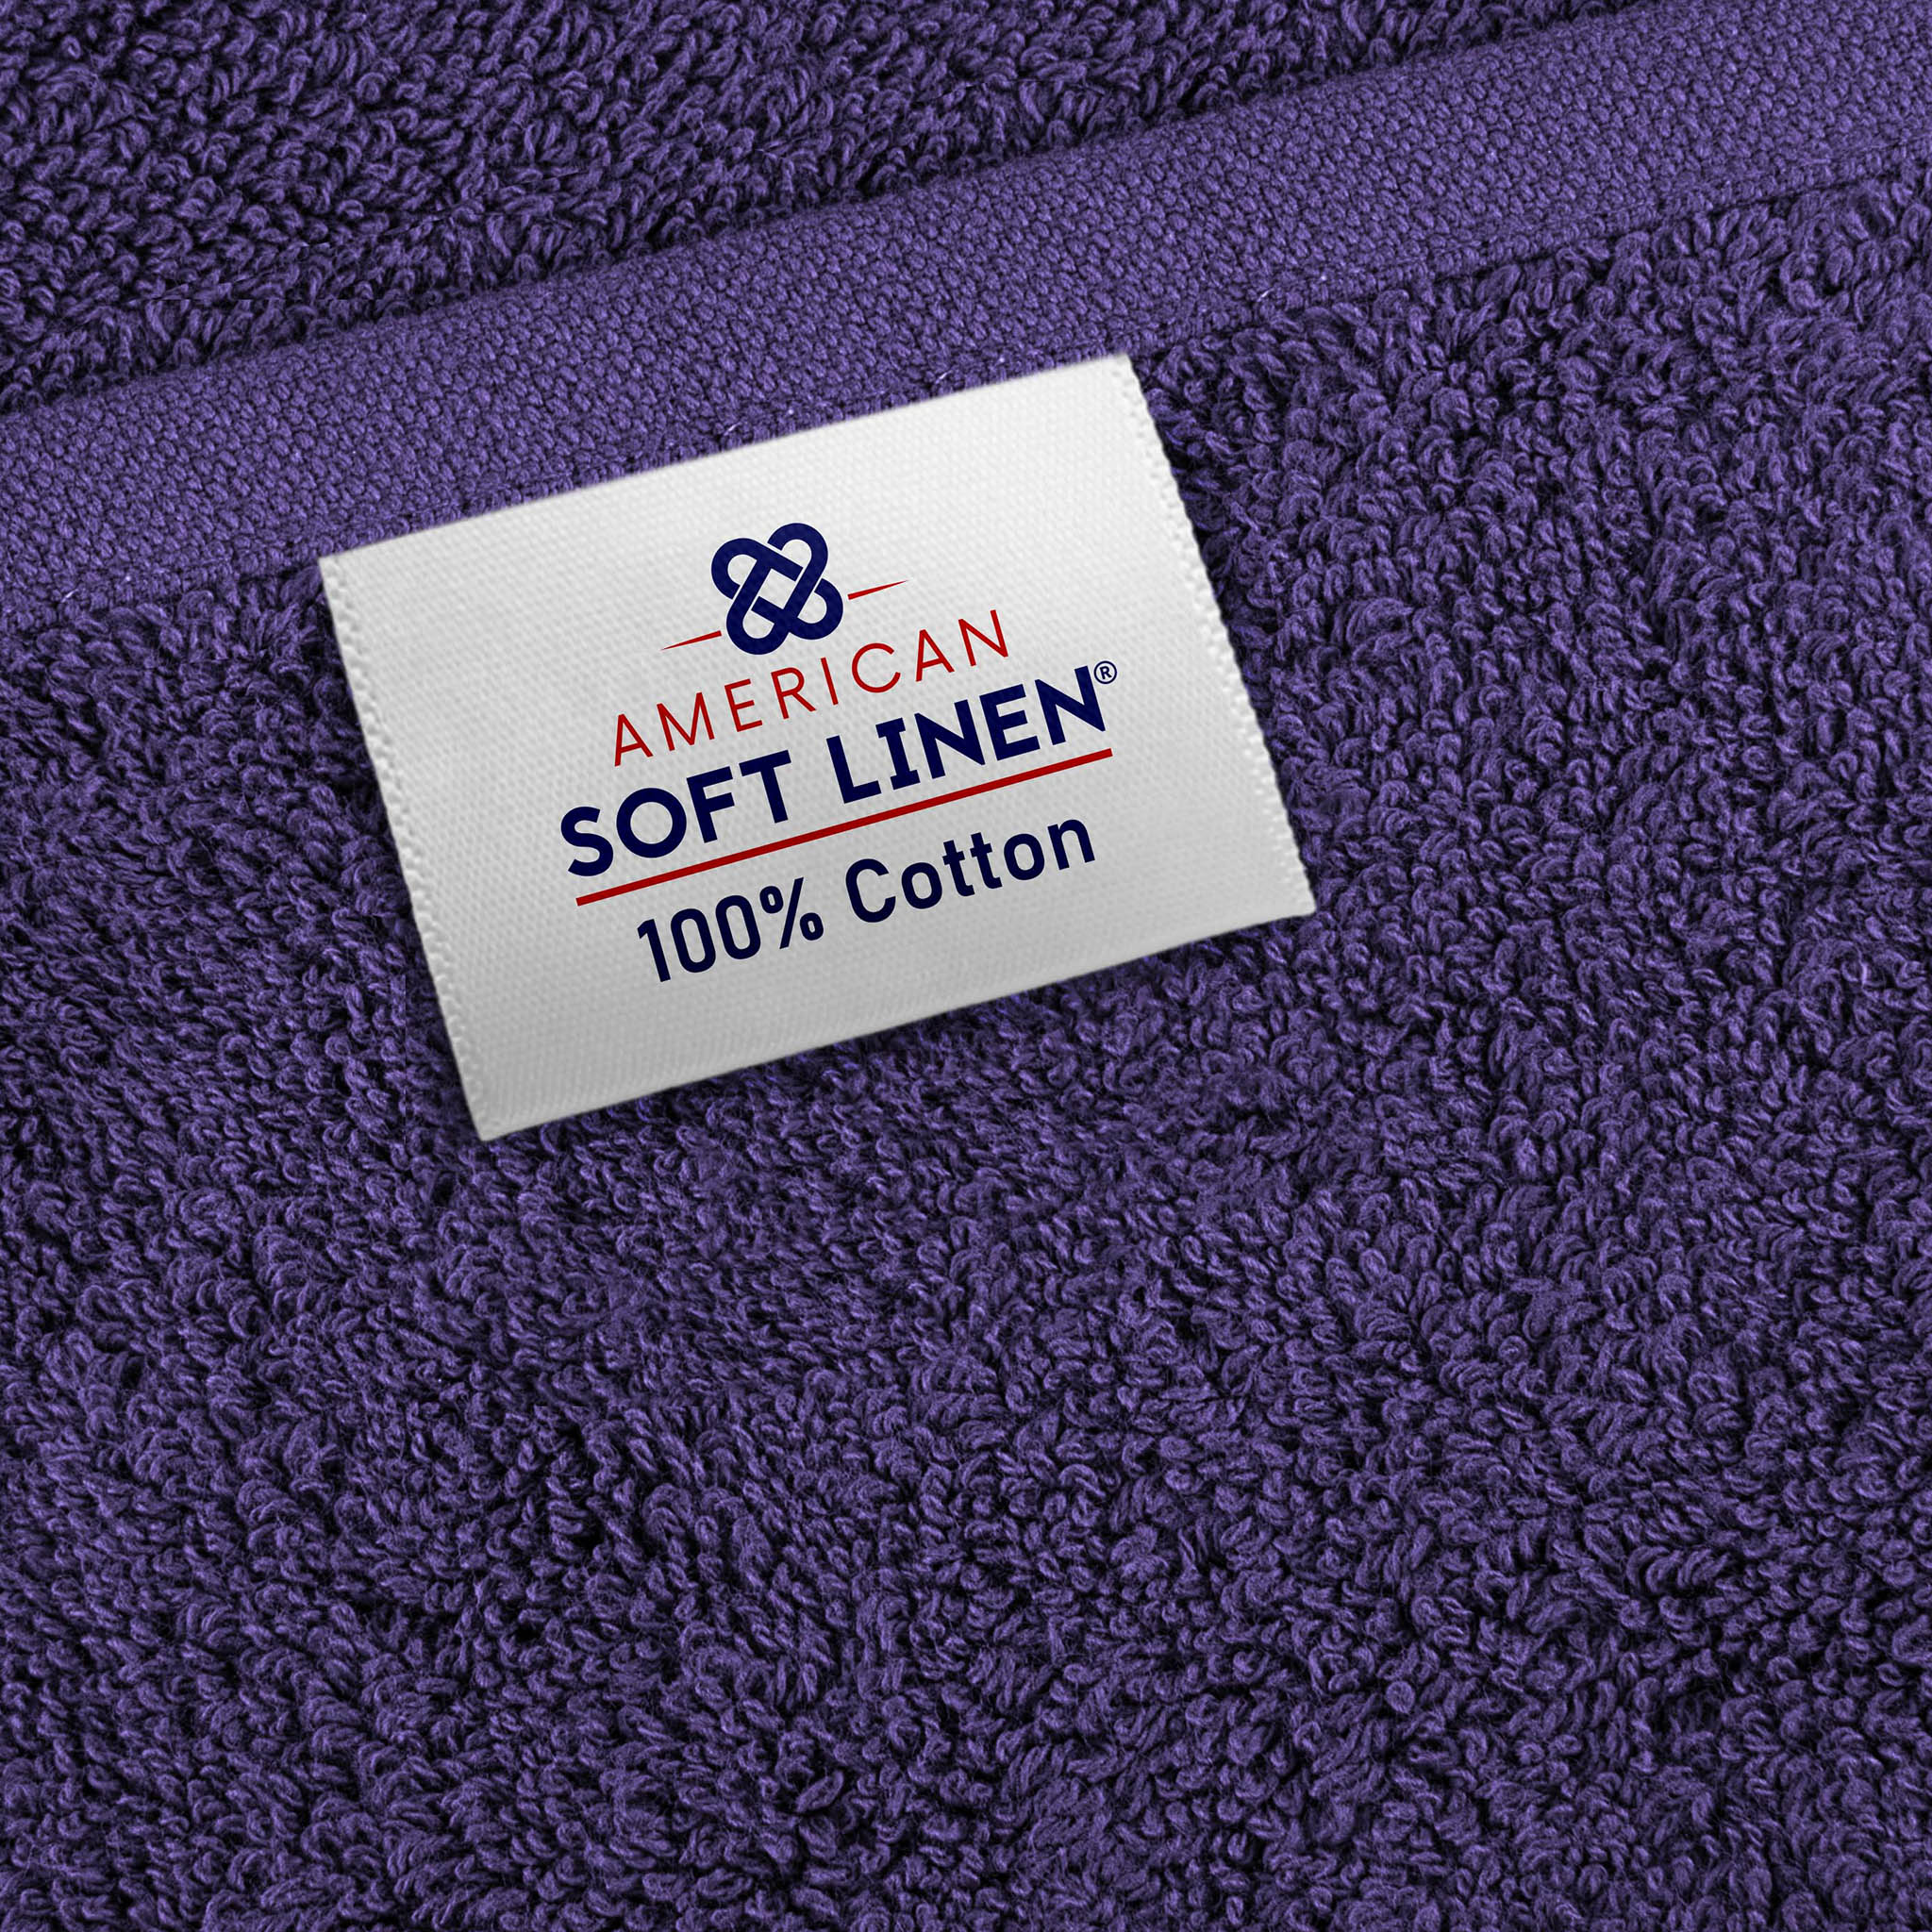 American Soft Linen 100% Ring Spun Cotton 40x80 Inches Oversized Bath Sheets purple-6